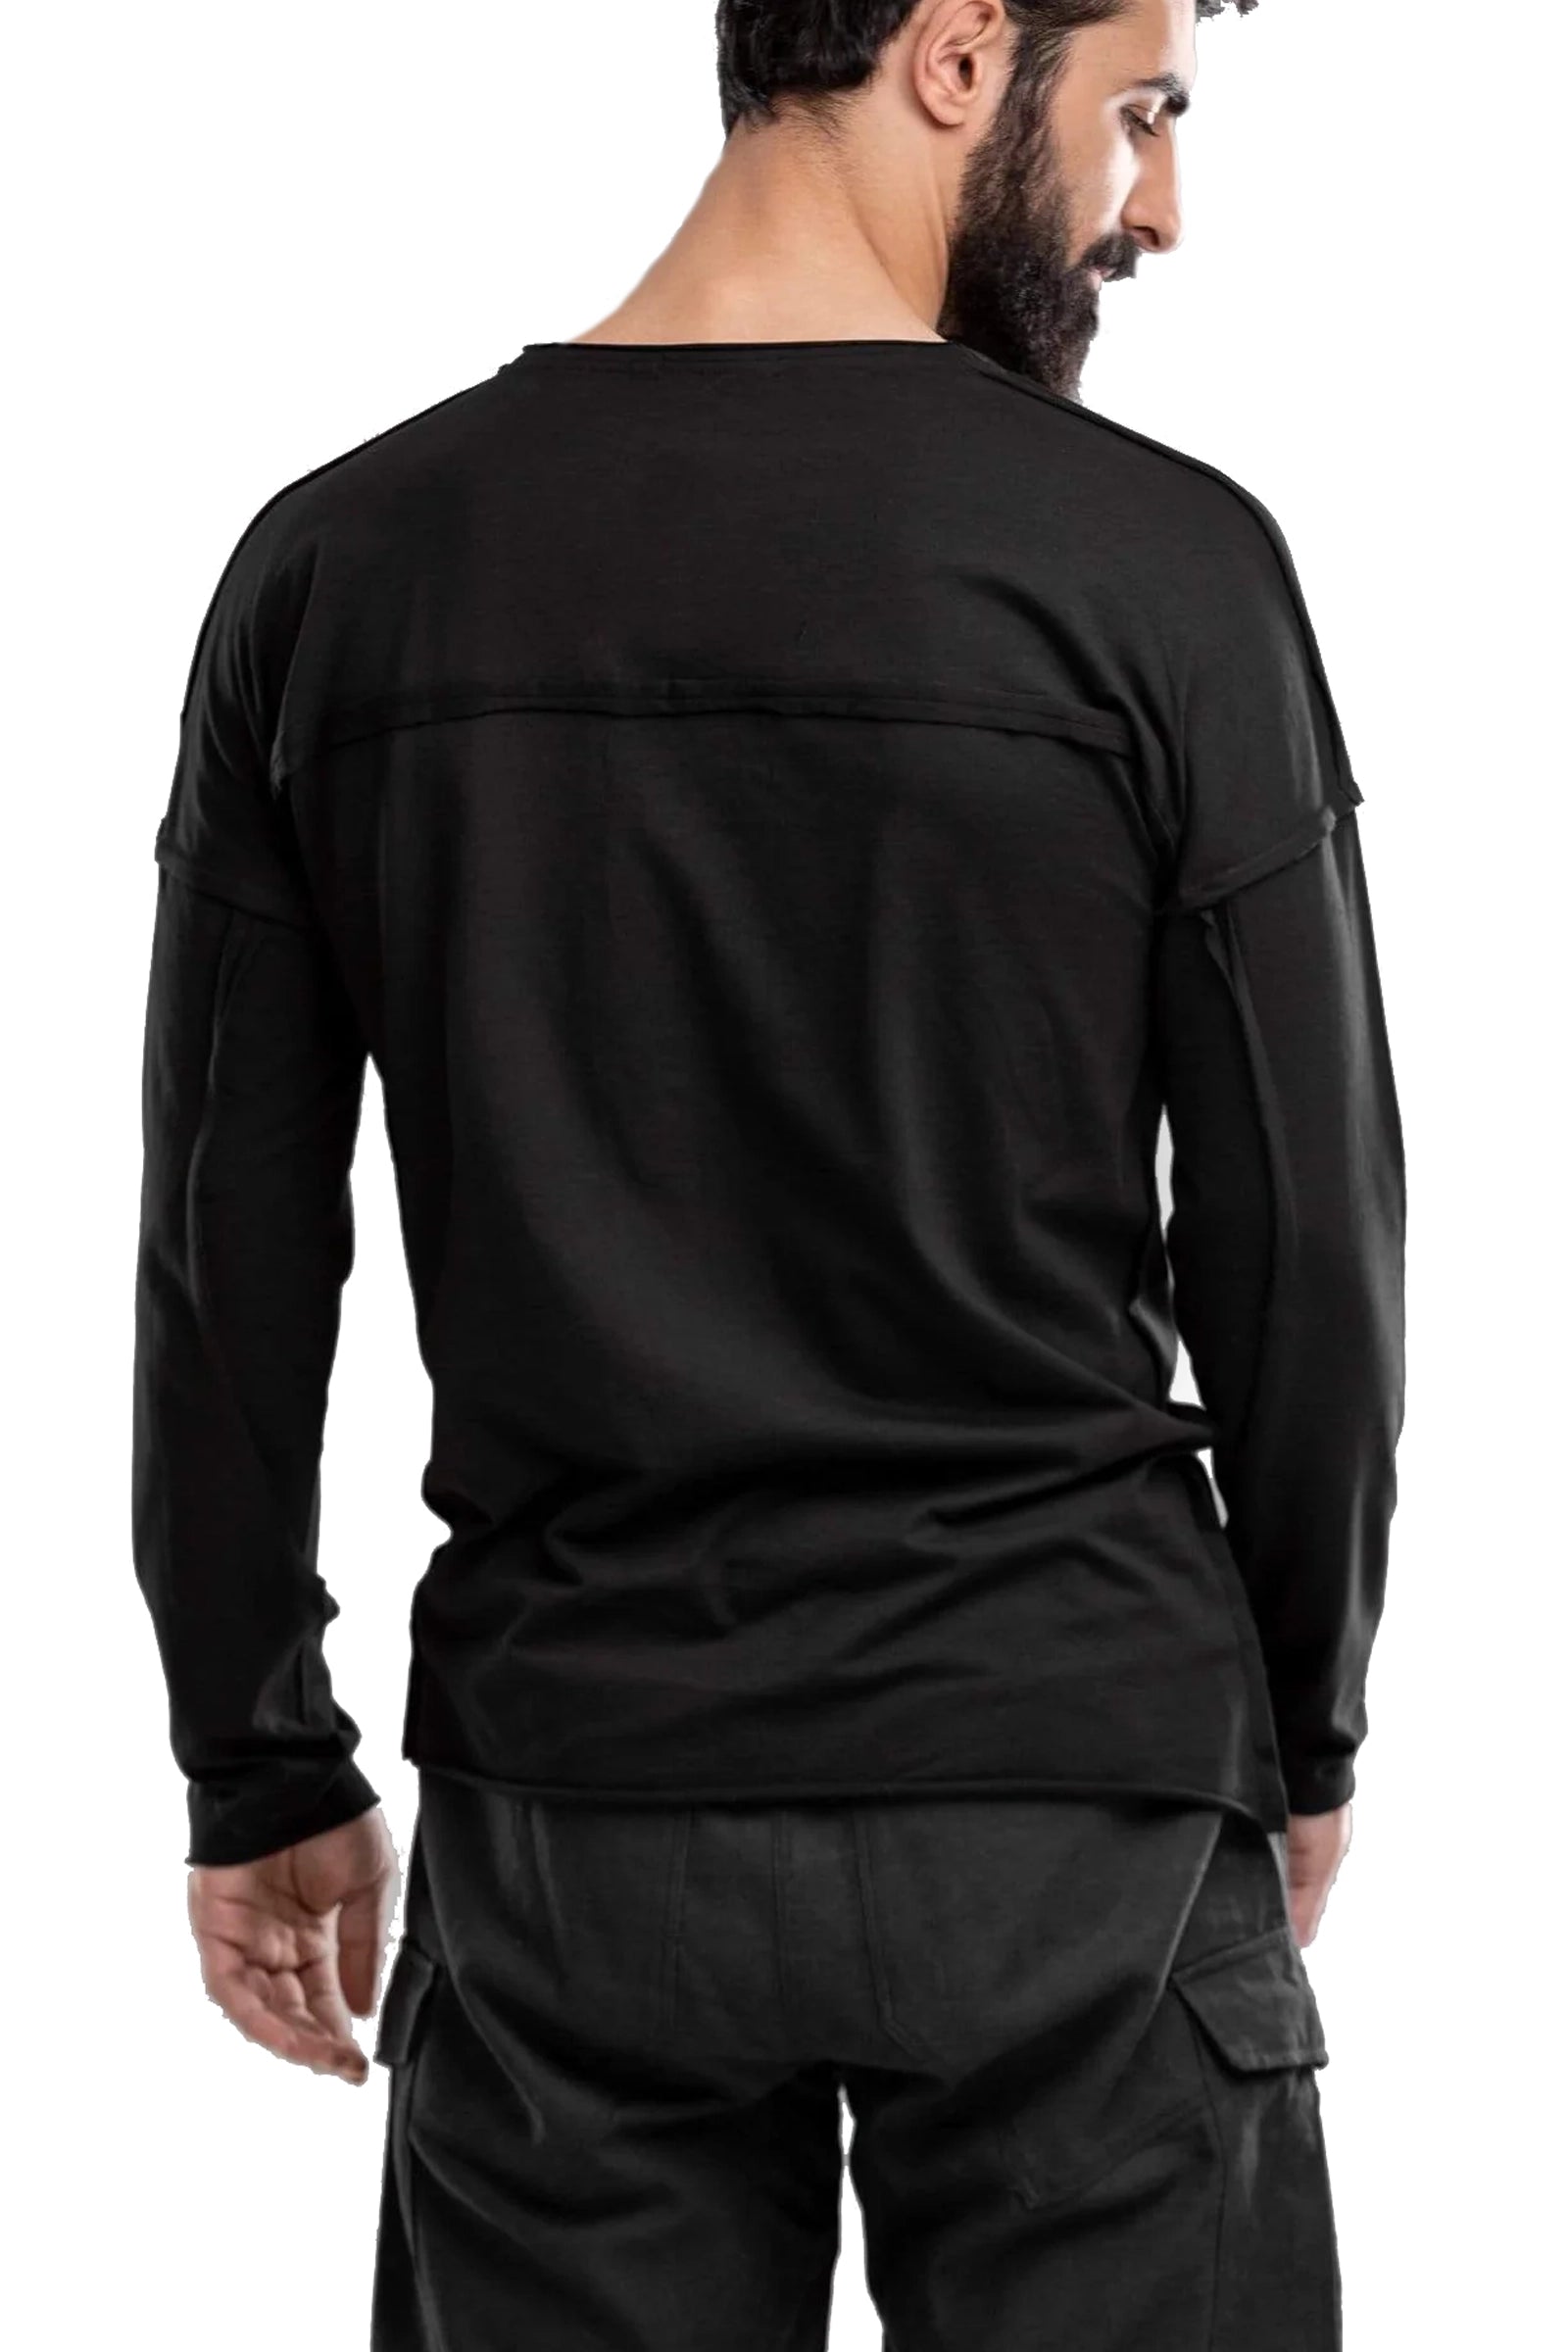 Bundle: Black & Khaki Long Sleeve T-shirt